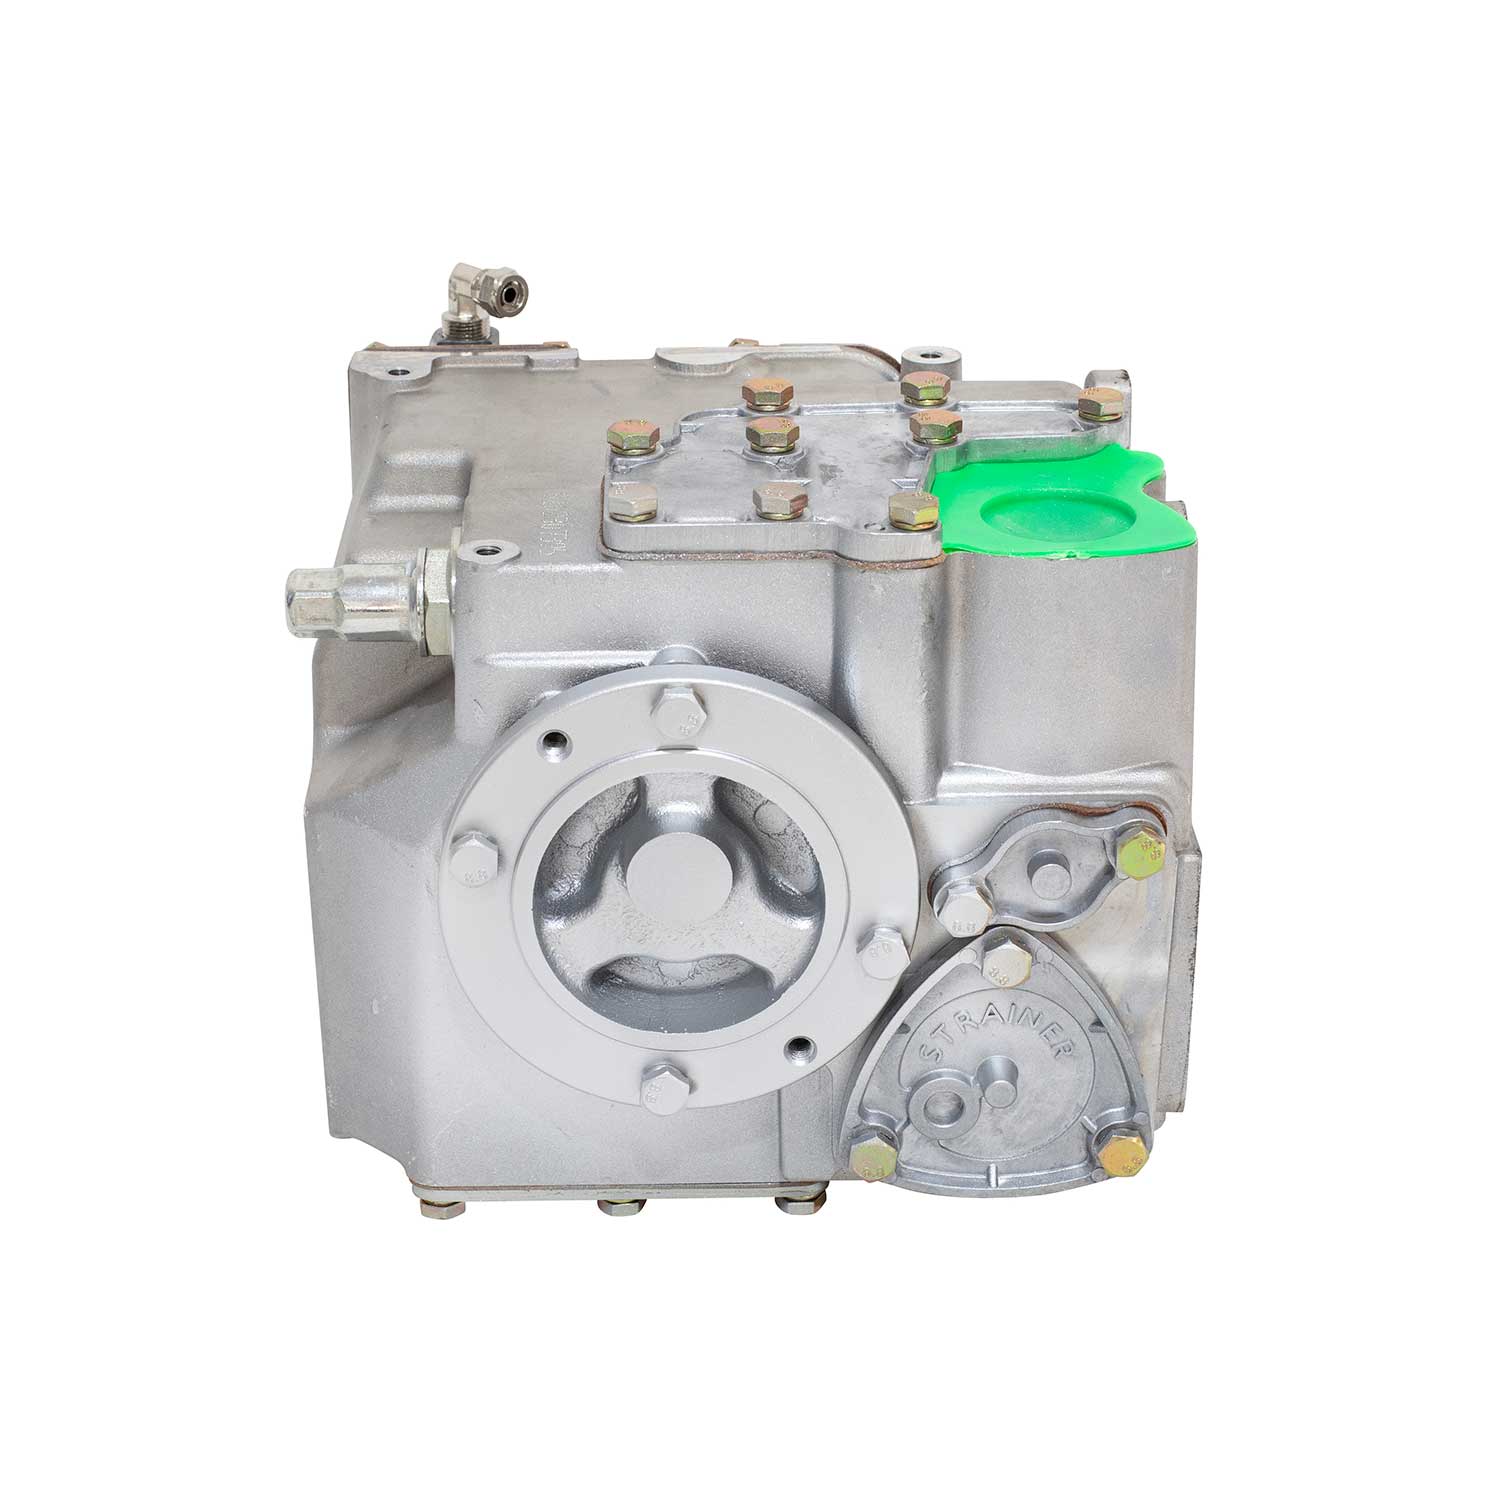 Hign Flow Good Quality Fuel Pump ZHB-90 for Fuel Dispenser